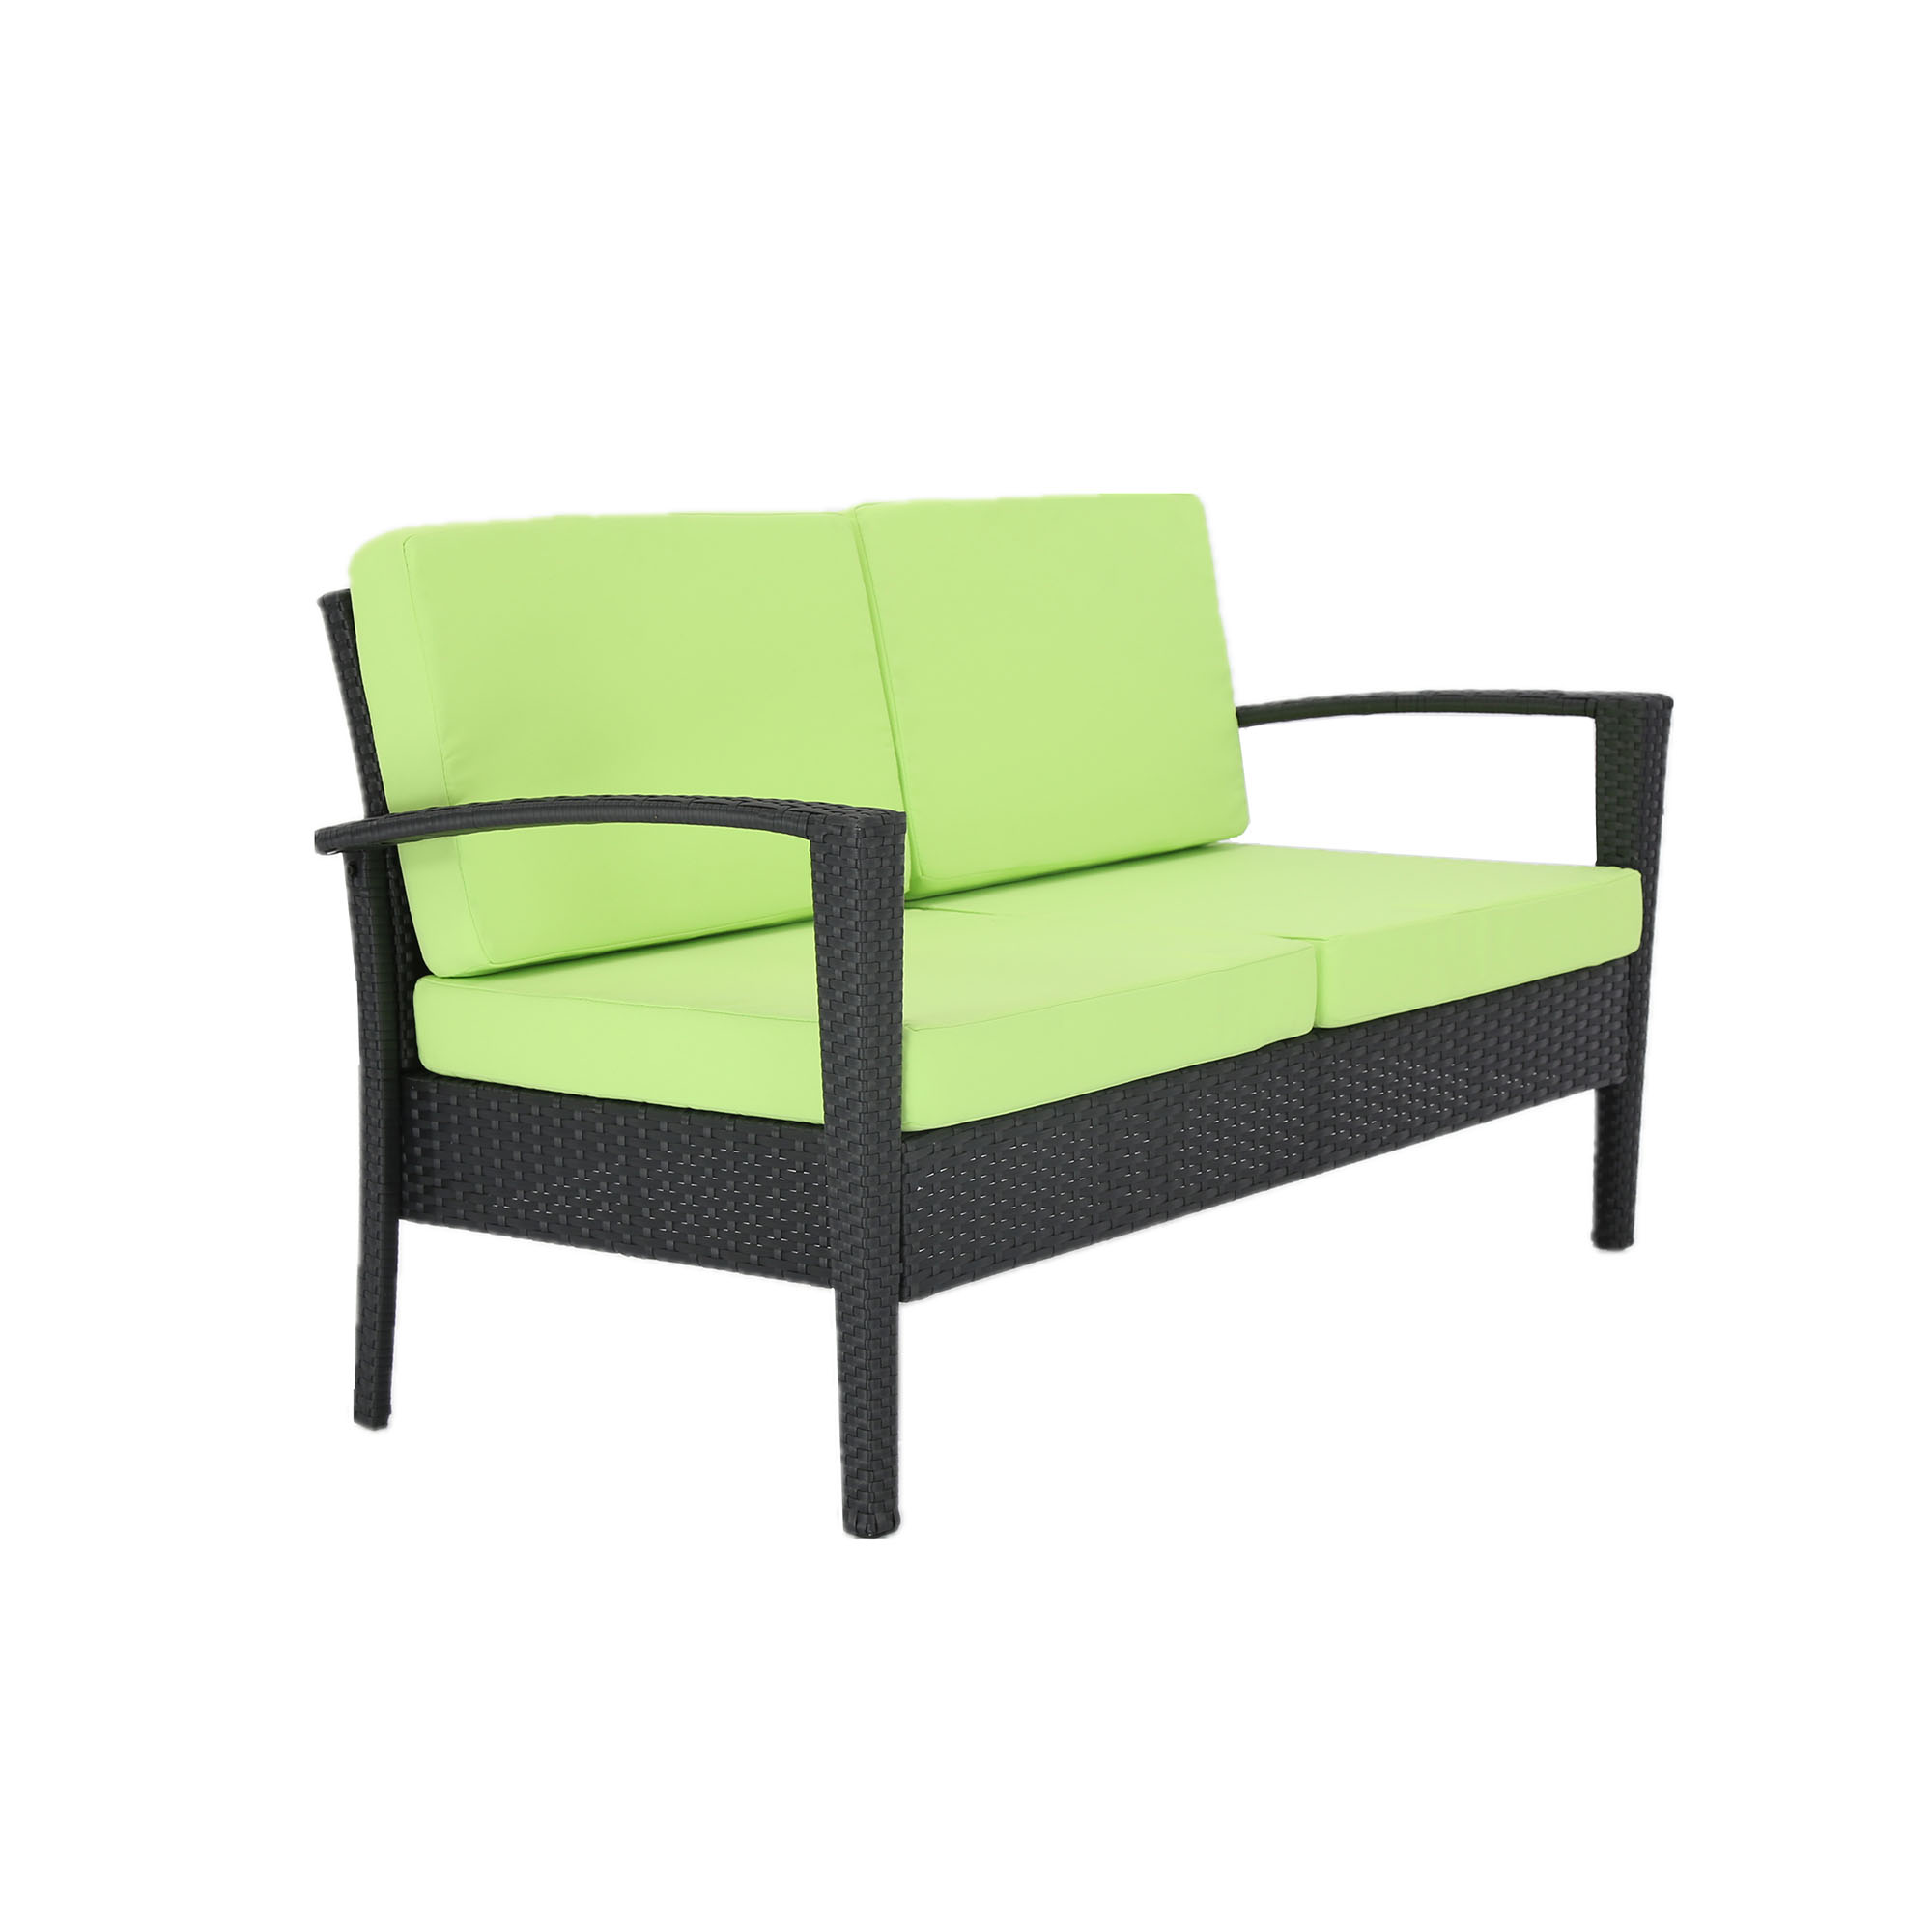 Baner Garden Wicker 4 Piece Black Patio Conversation Set with Green Cushions - image 5 of 11